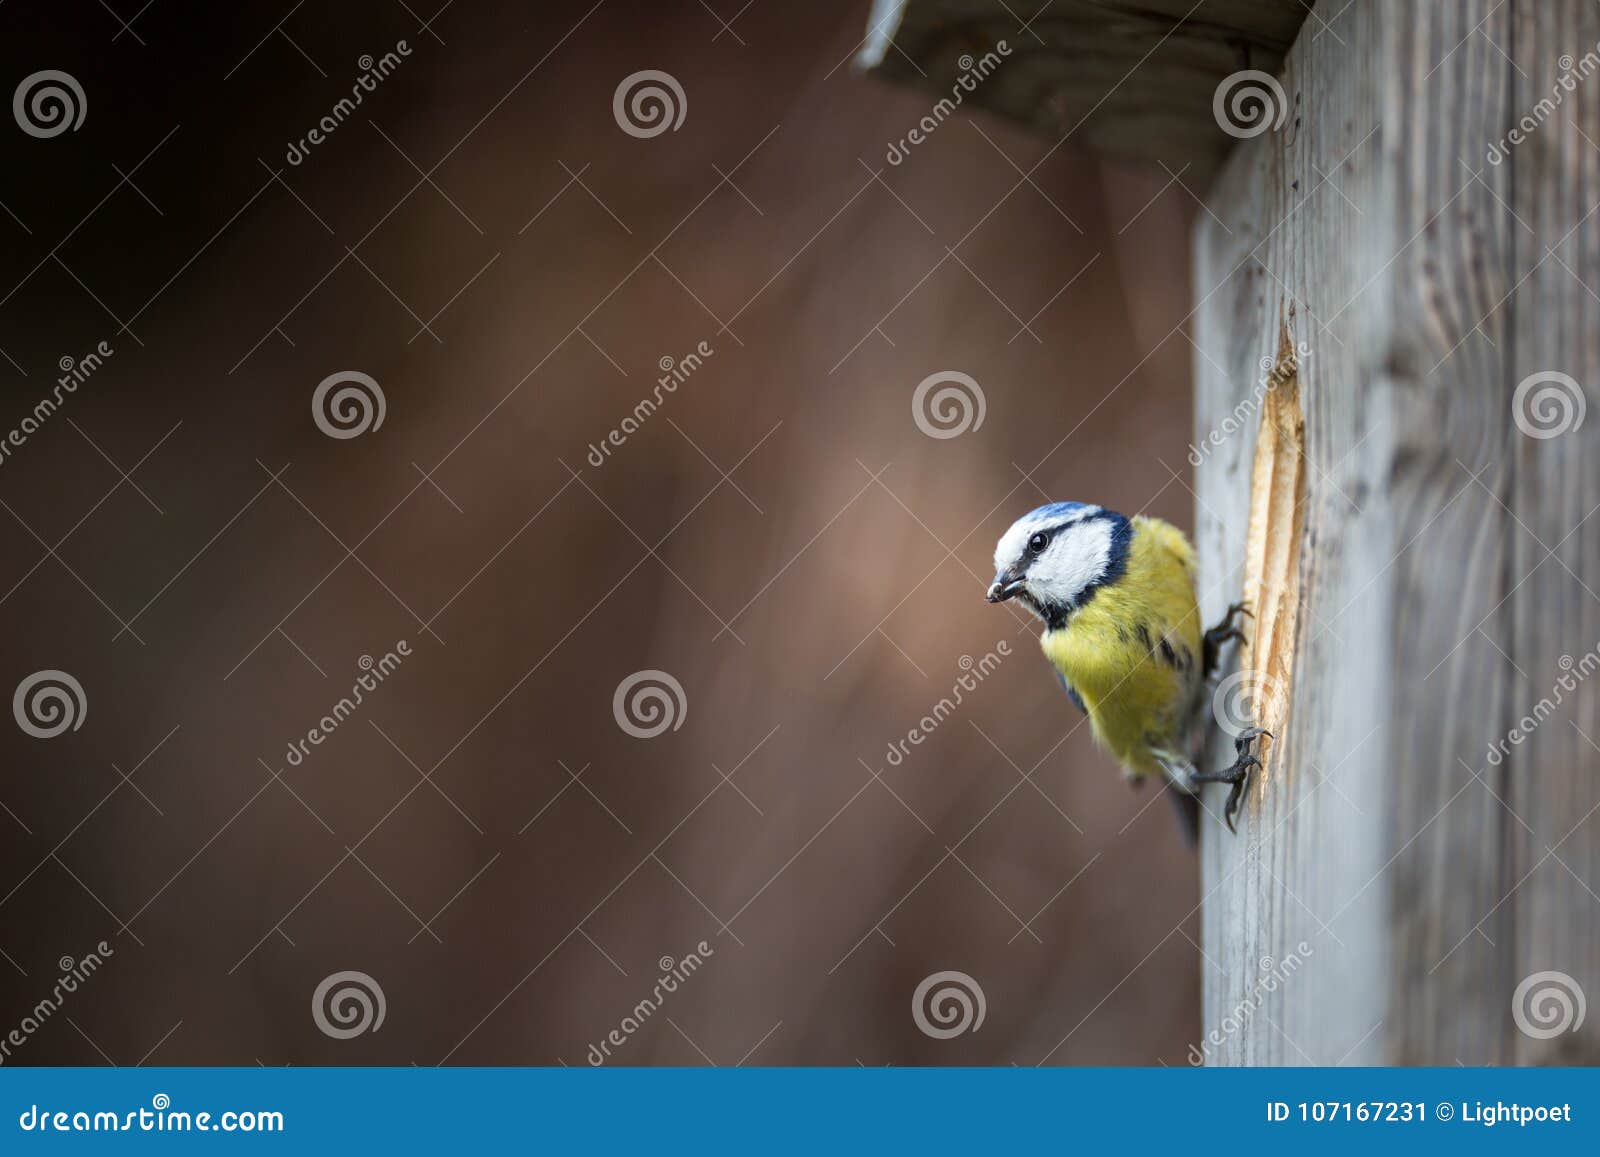 blue tit parus caeruleus on a bird house it inhabits